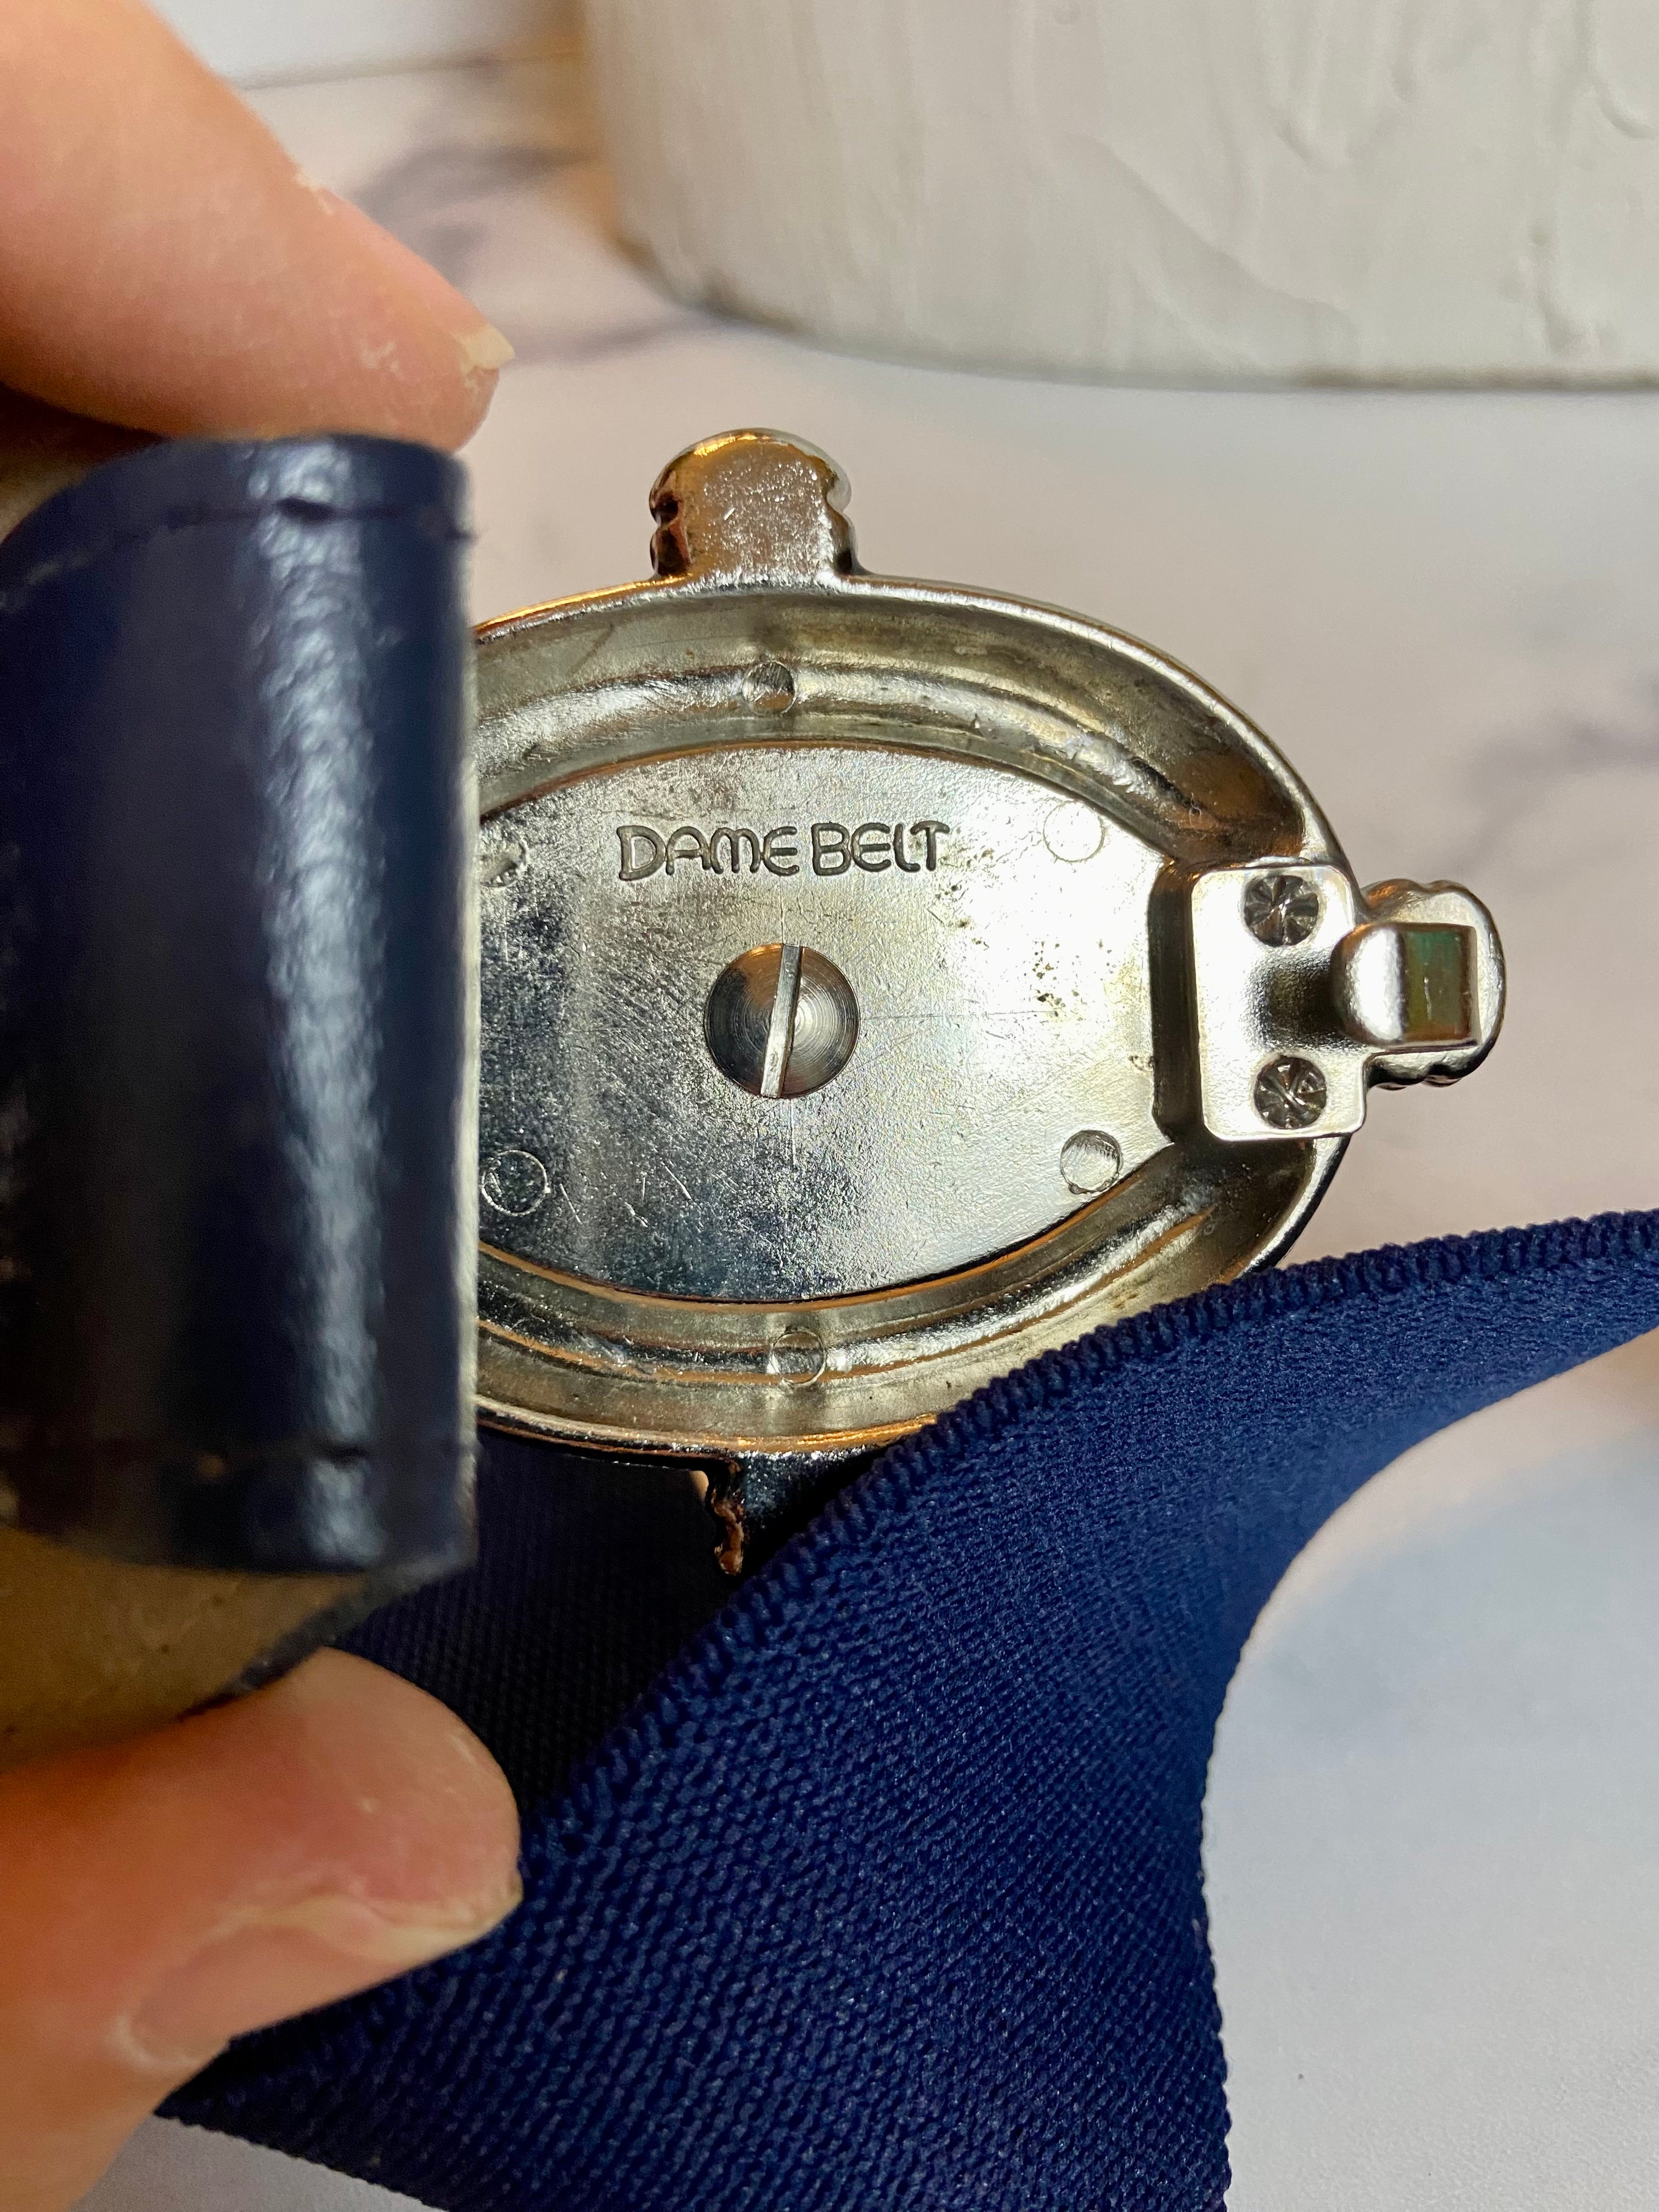 Navy blue elastic belt